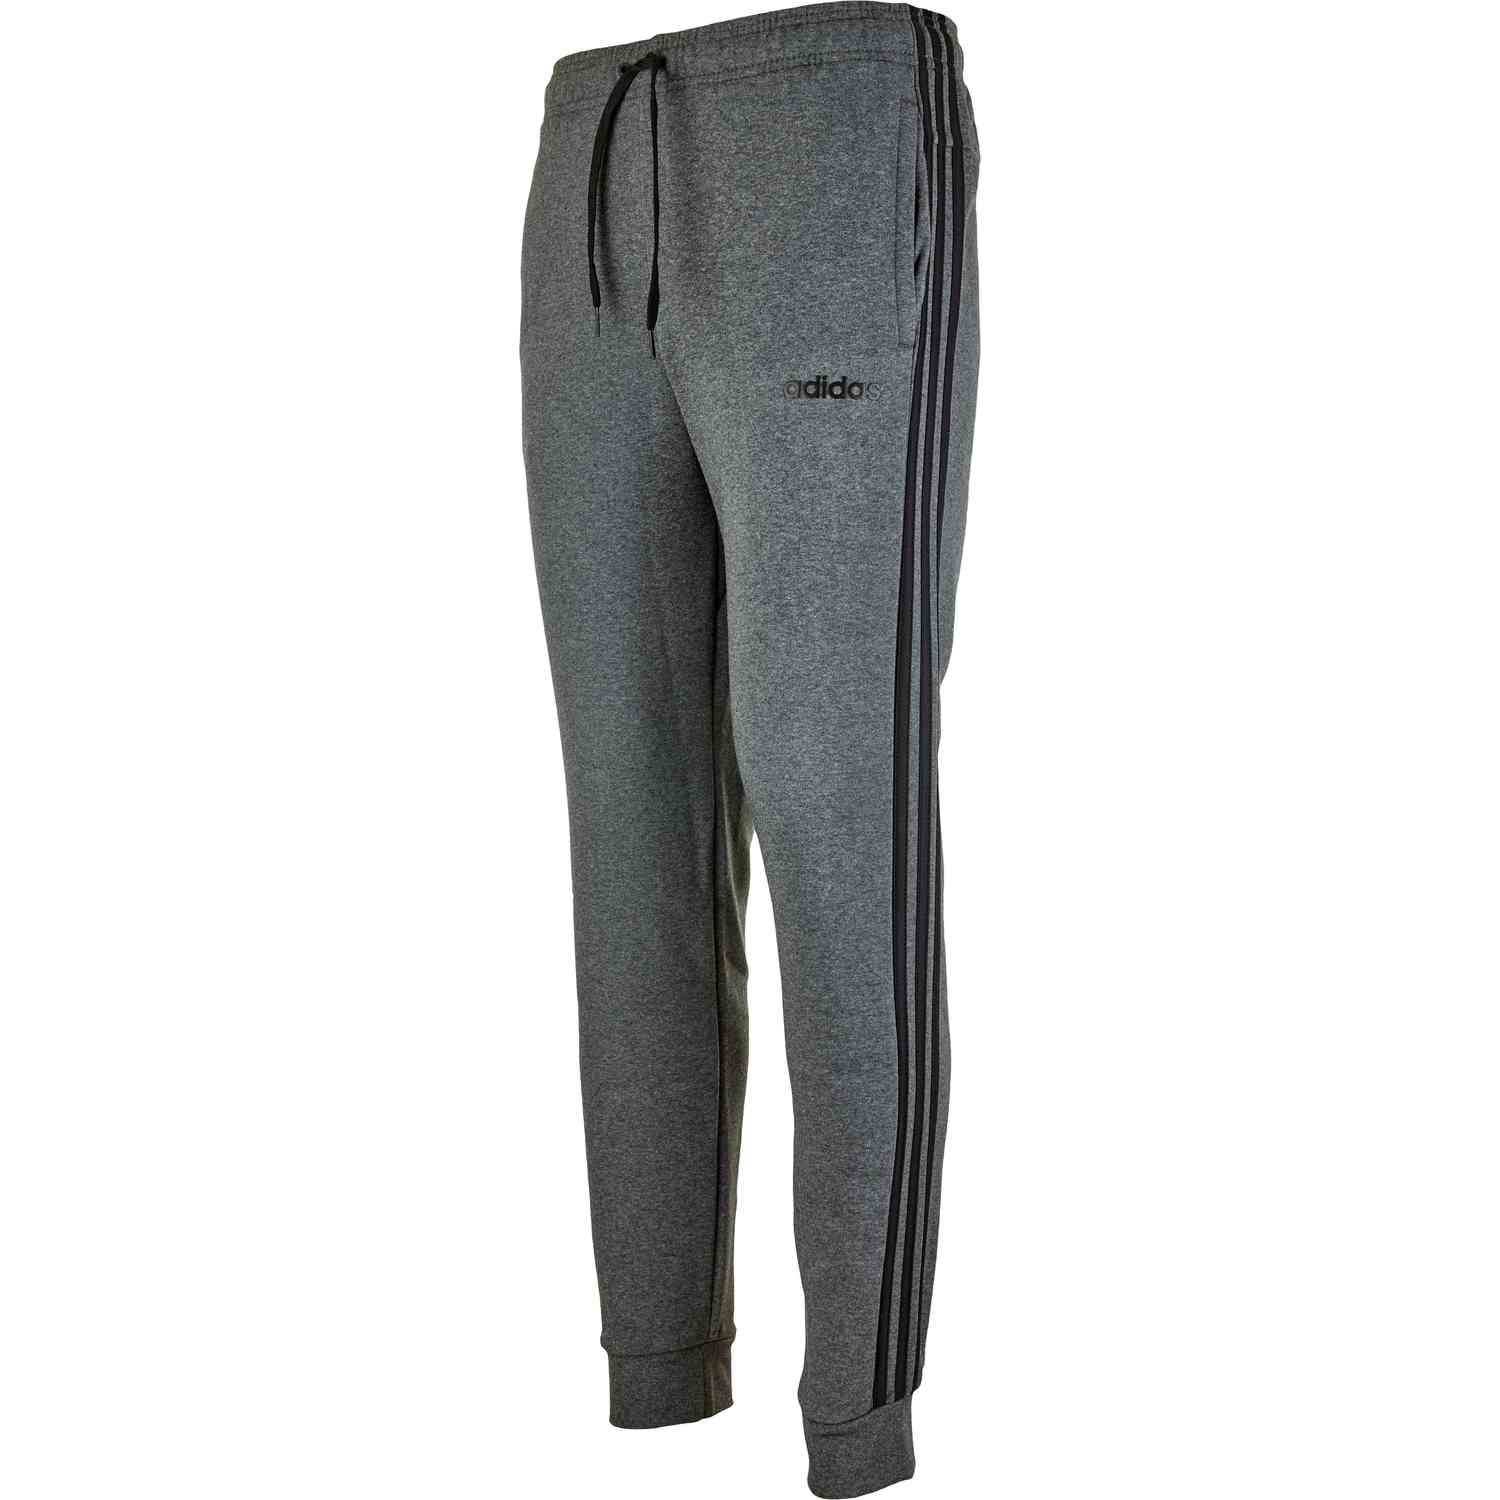 grey adidas pants with black stripes